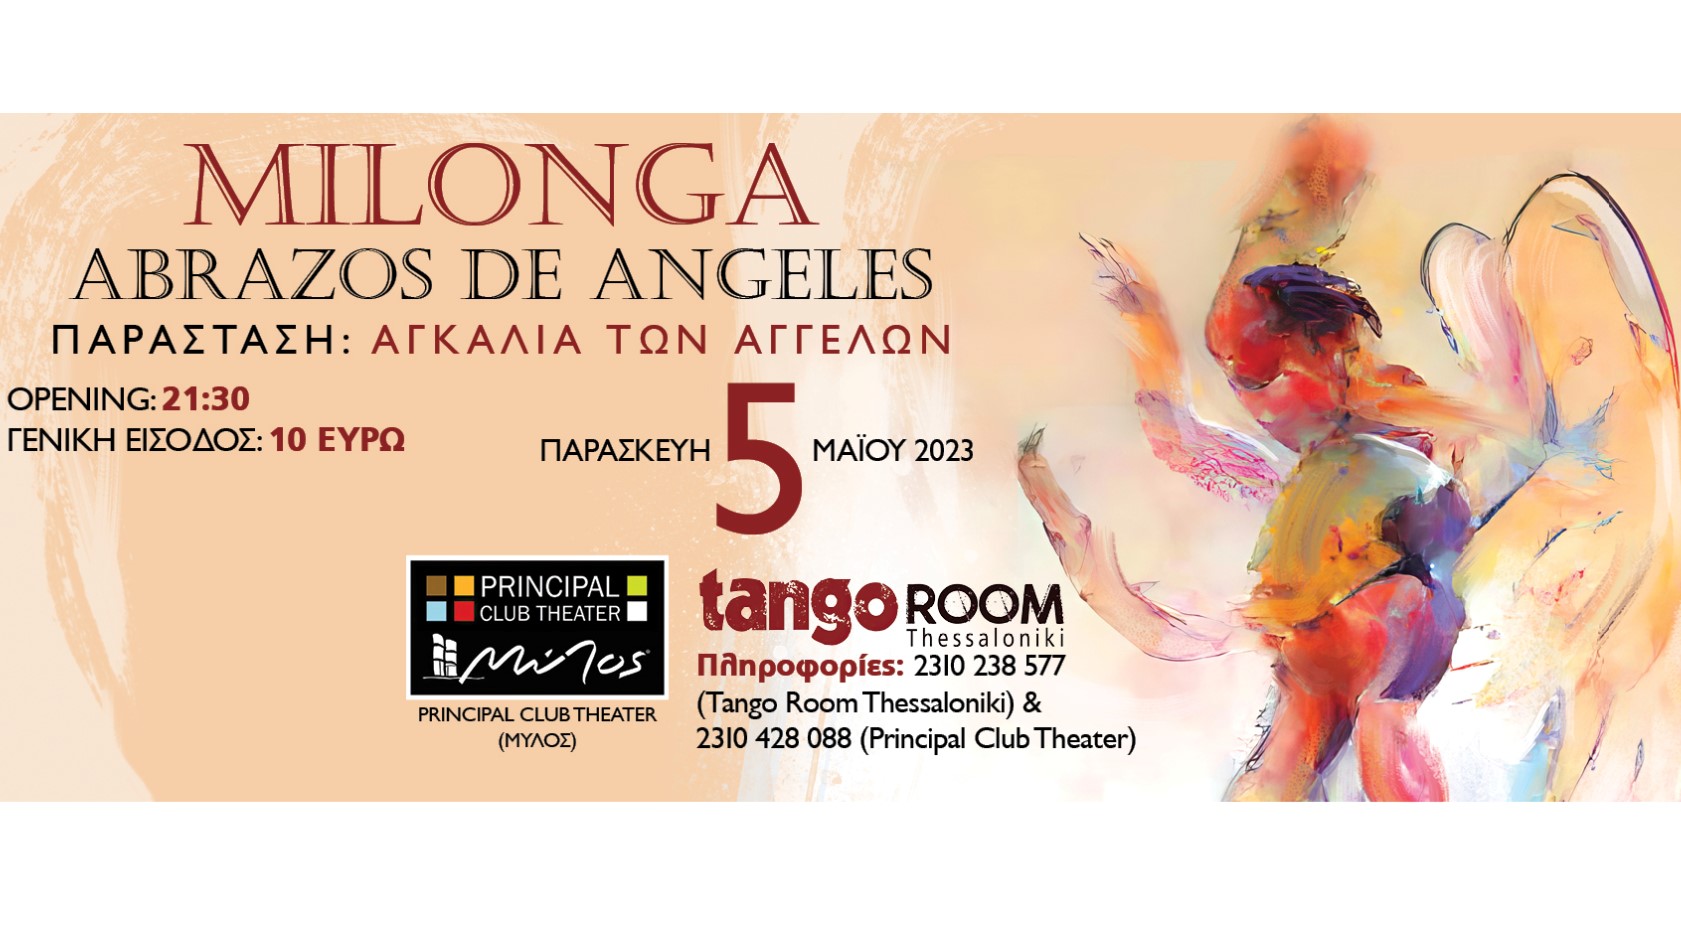 Milonga Abrazos de Angeles: Μία ξεχωριστή βραδιά Αργεντίνικου tango έρχεται στο Principal Club Theater